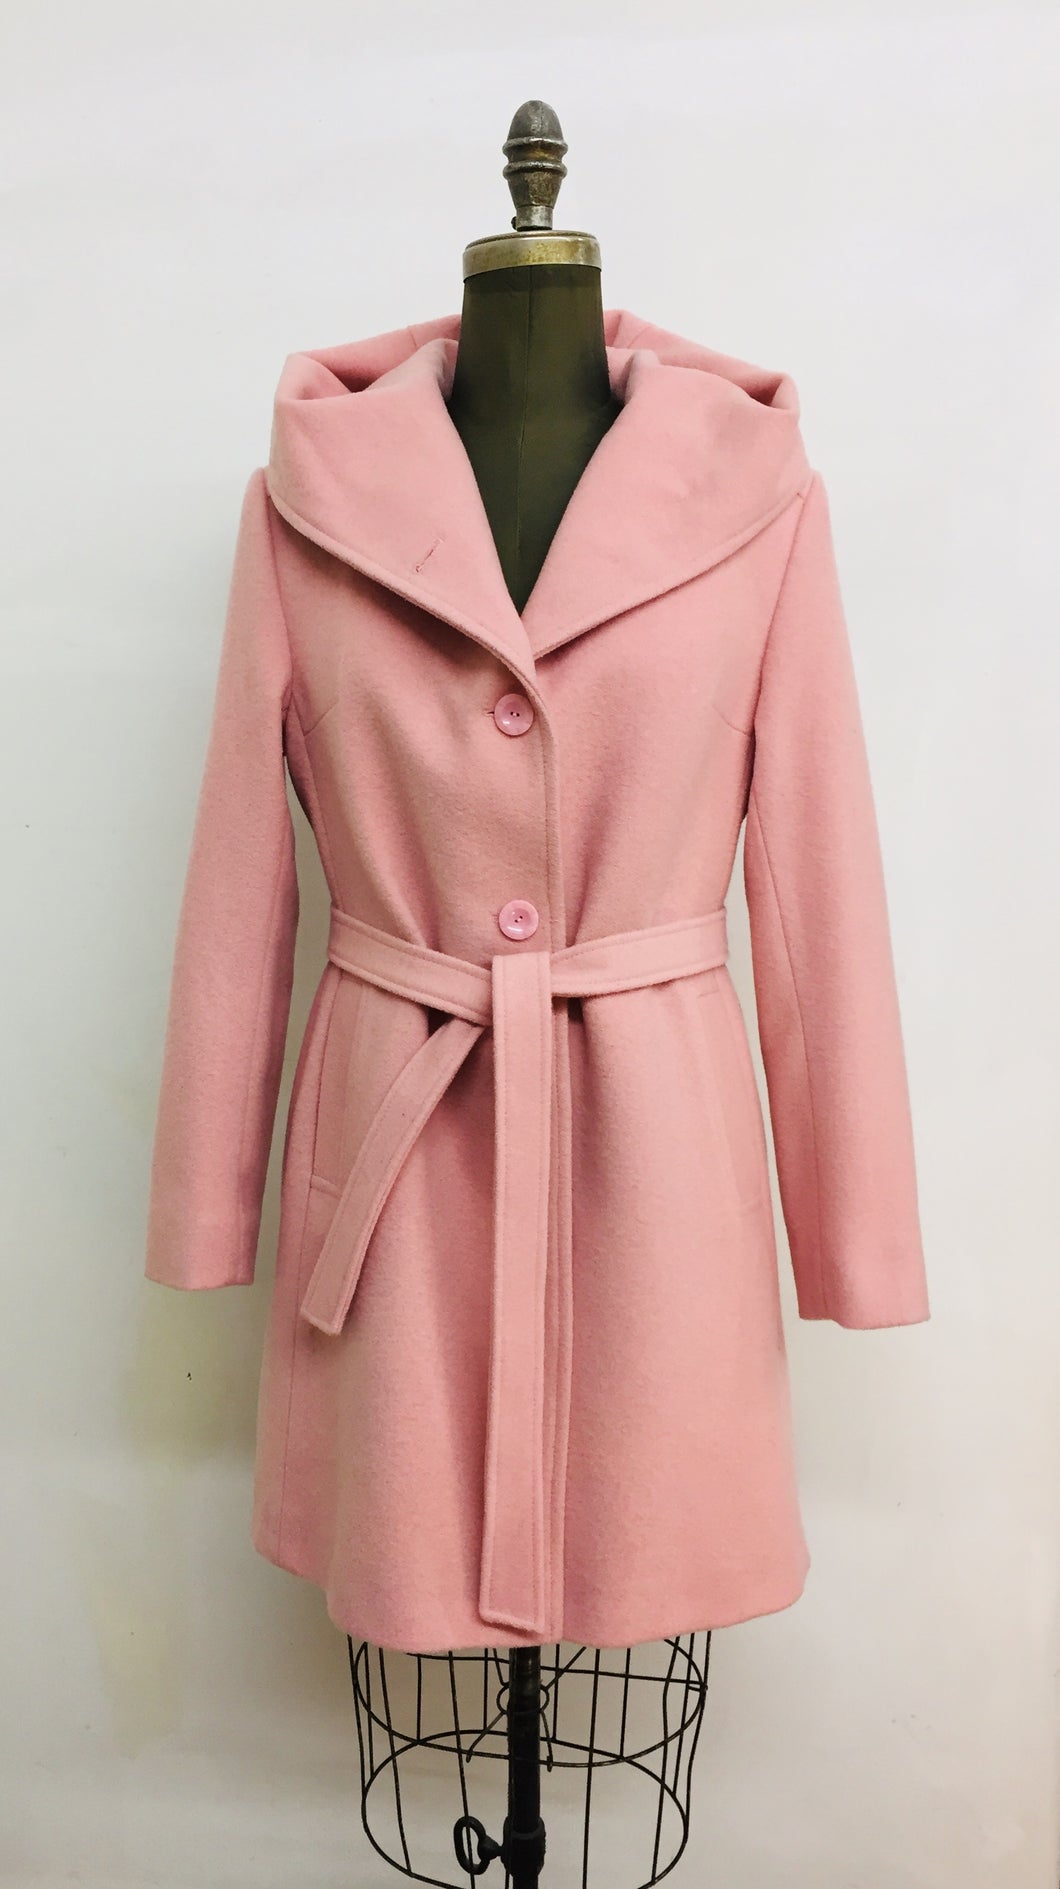 Tiffany Coat - 100% Pure Merino Wool